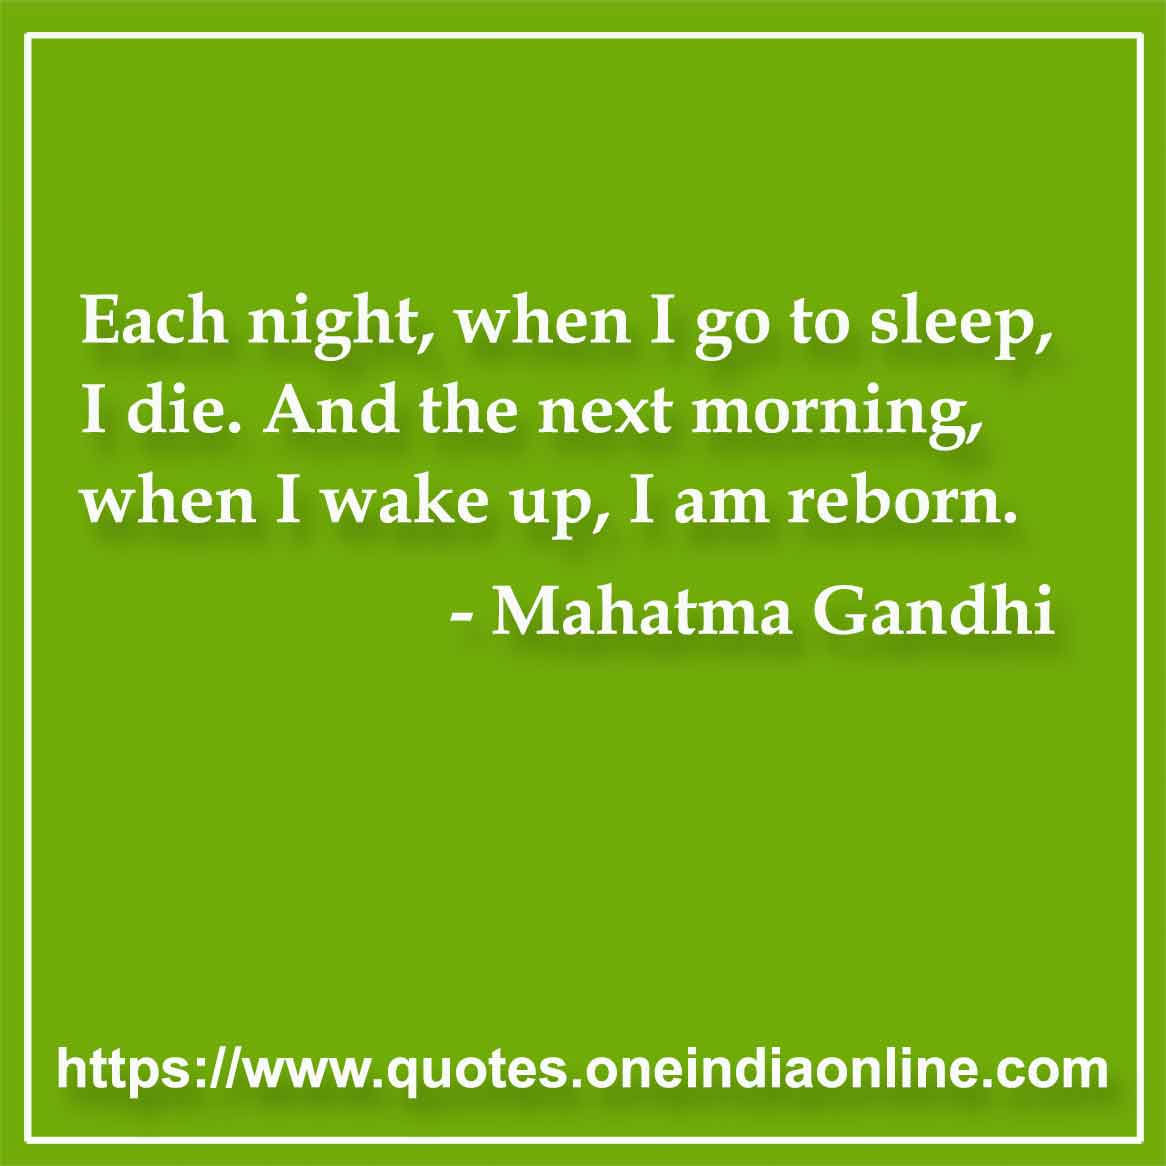 Each night, when I go to sleep, I die. And the next morning, when I wake up, I am reborn.

- Mahatma Gandhi 